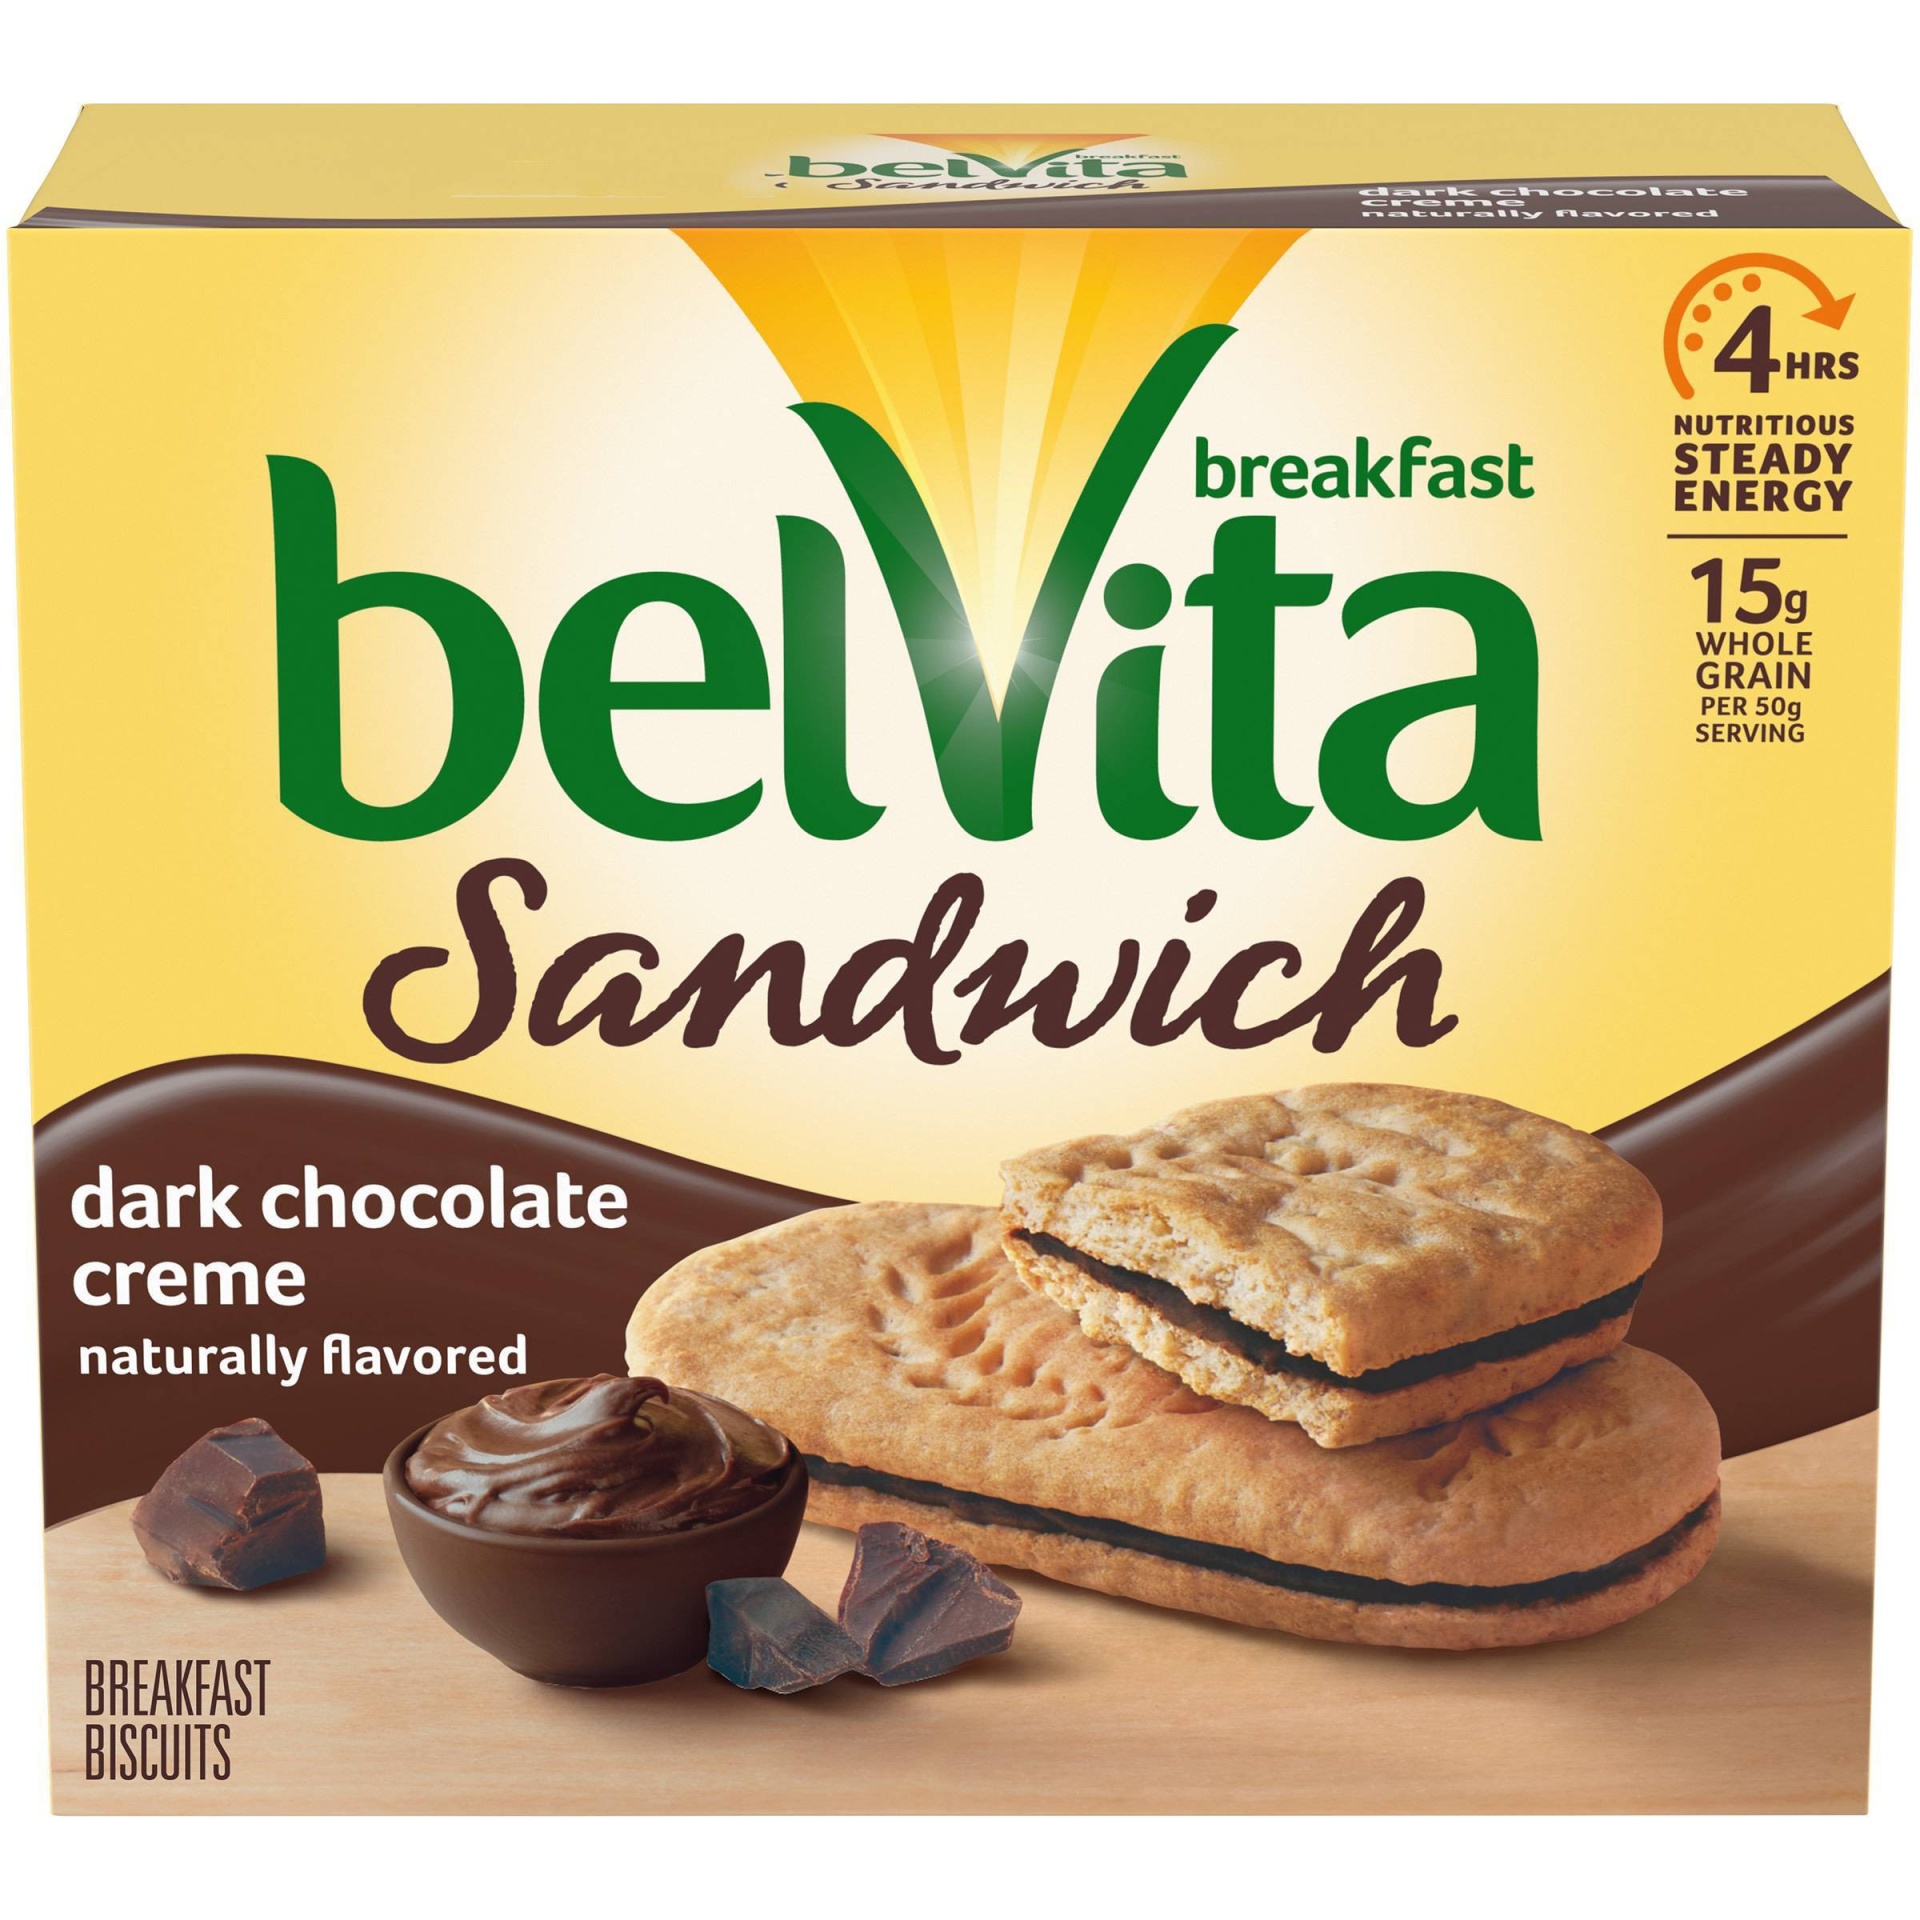 slide 1 of 9, Nabisco Belvita Dark Chocolate Creme Breakfast Biscuits, 8.8 oz